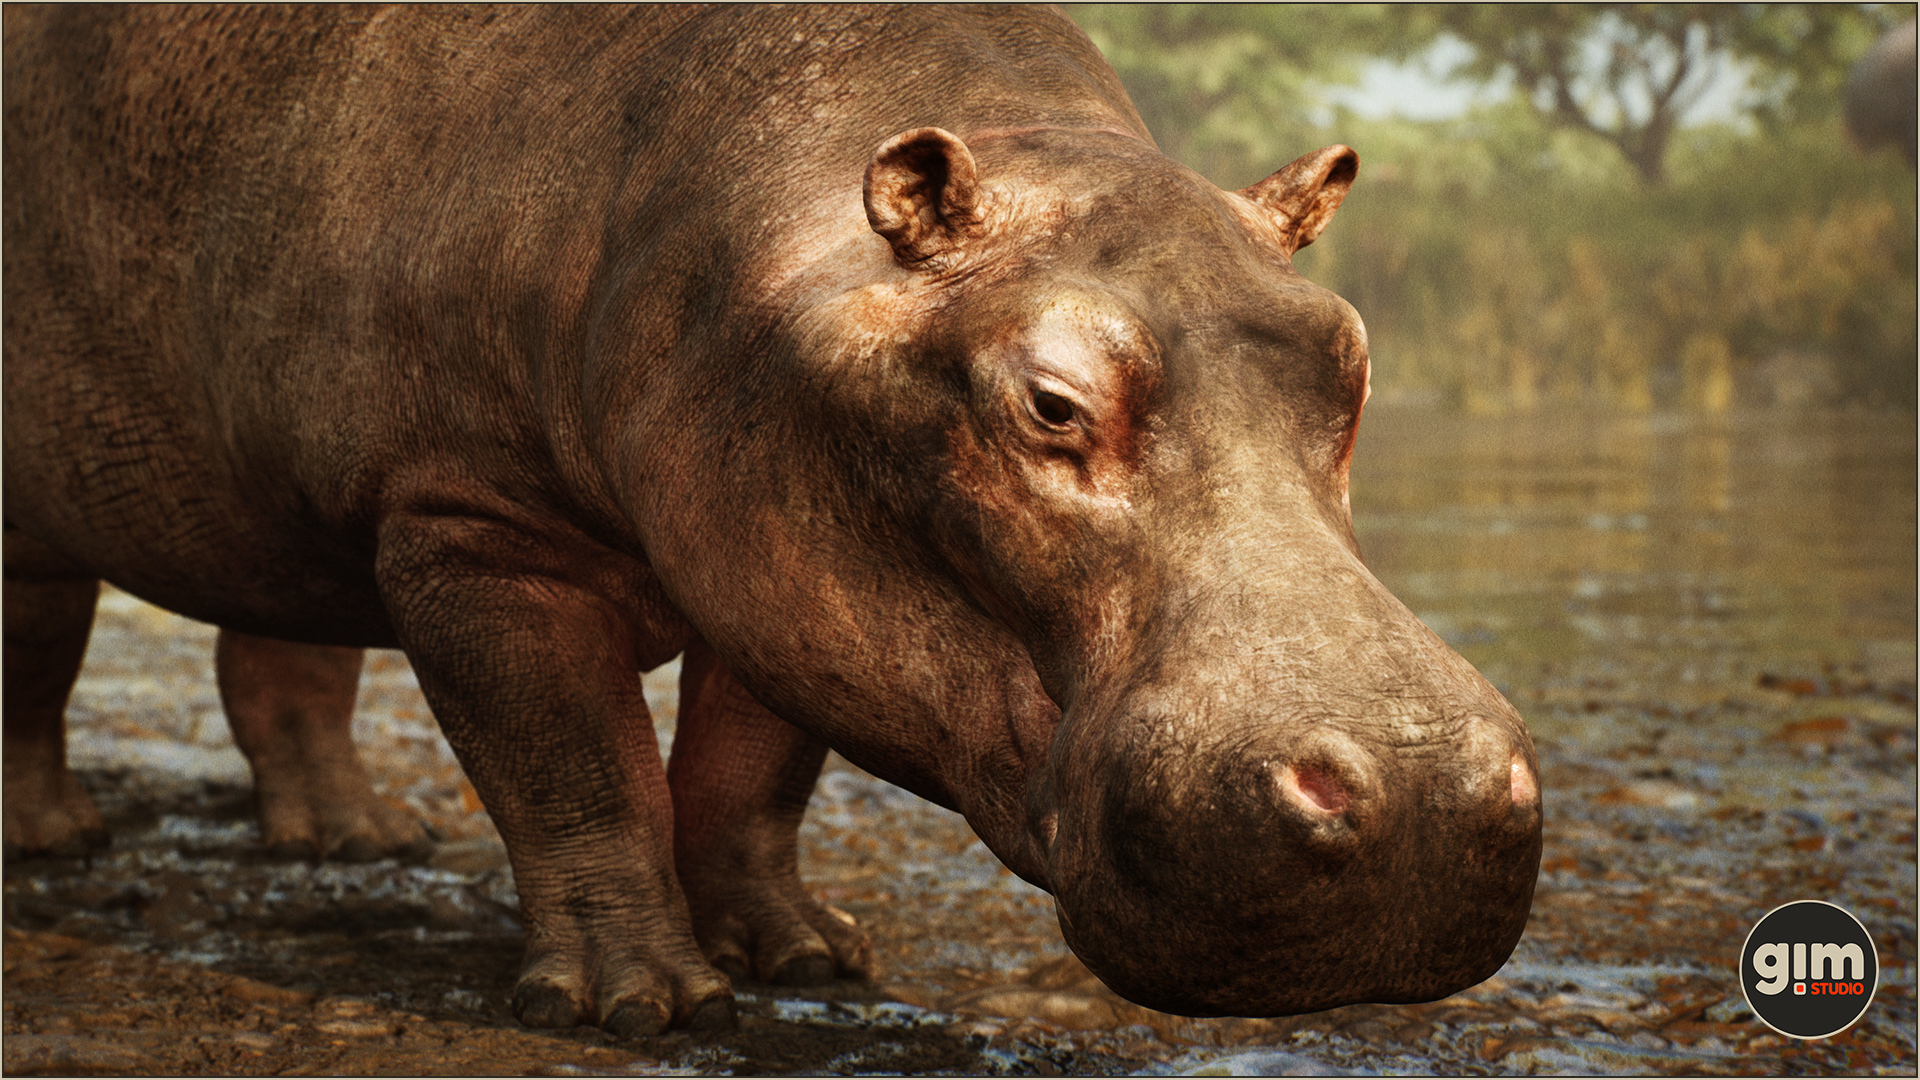 Male Hippo in close-up shot.